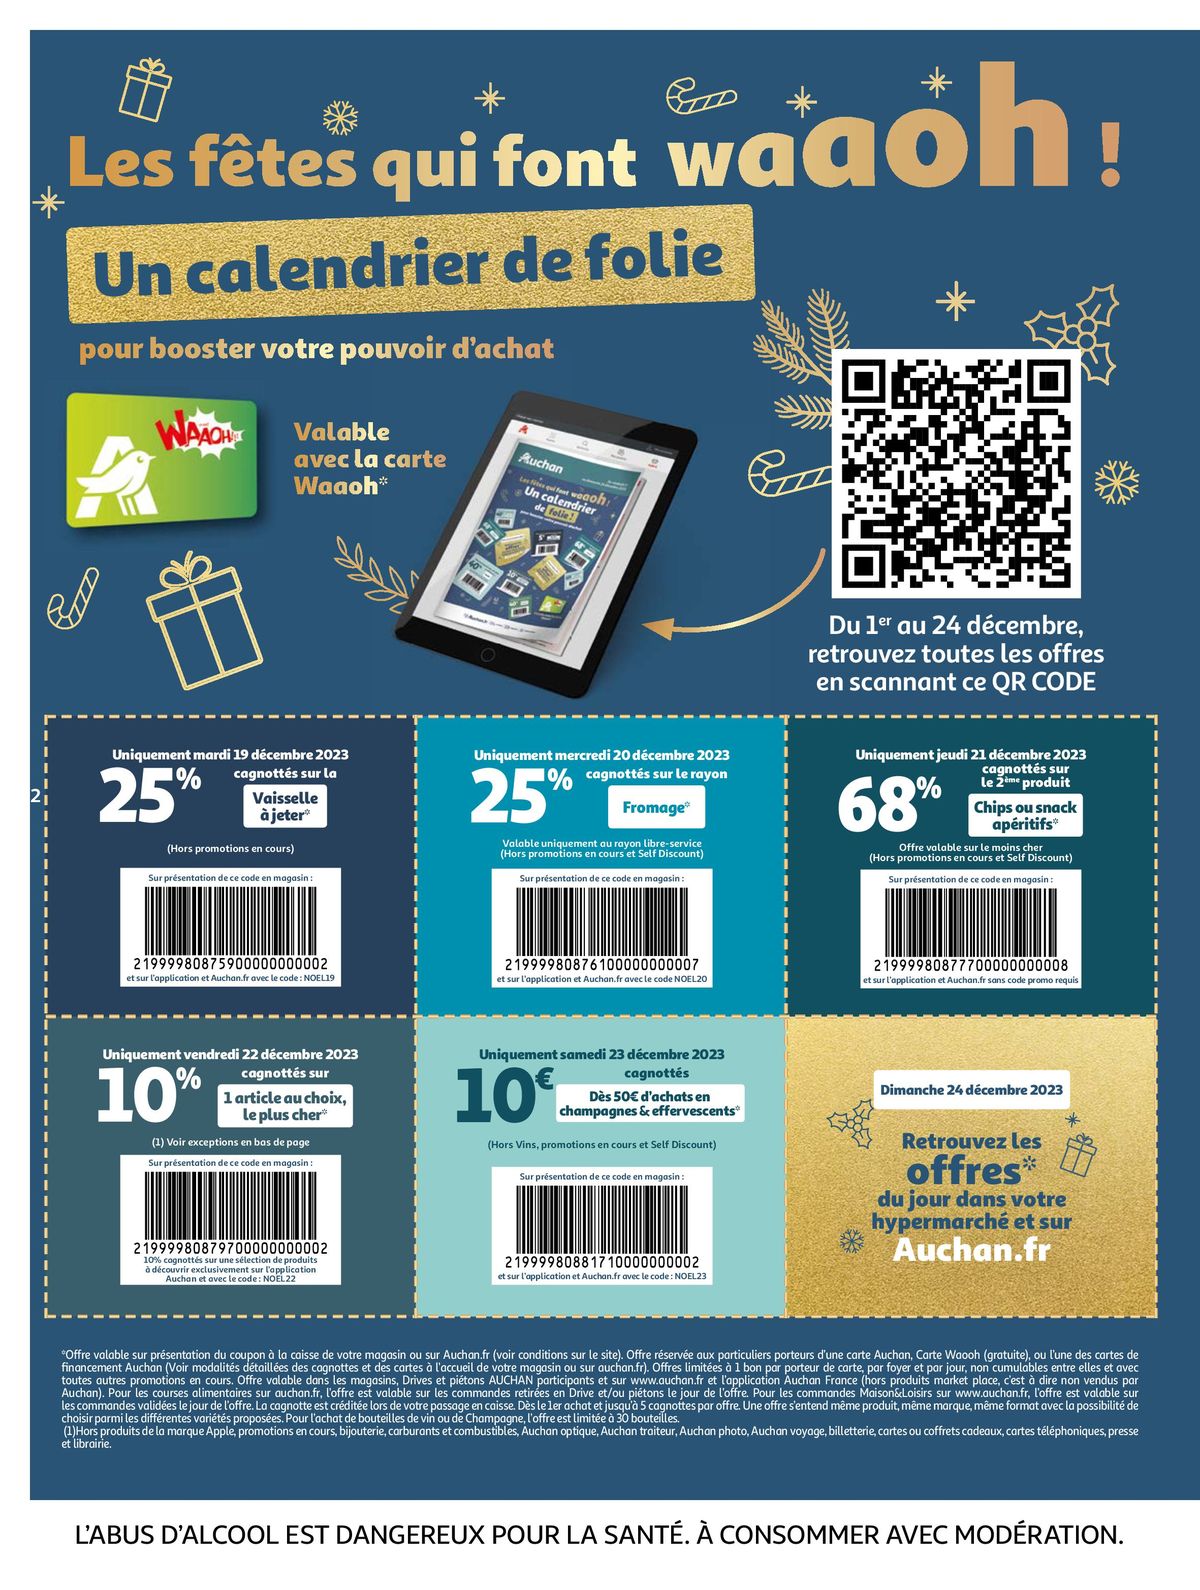 Catalogue Les fêtes qui font waaoh !, page 00002